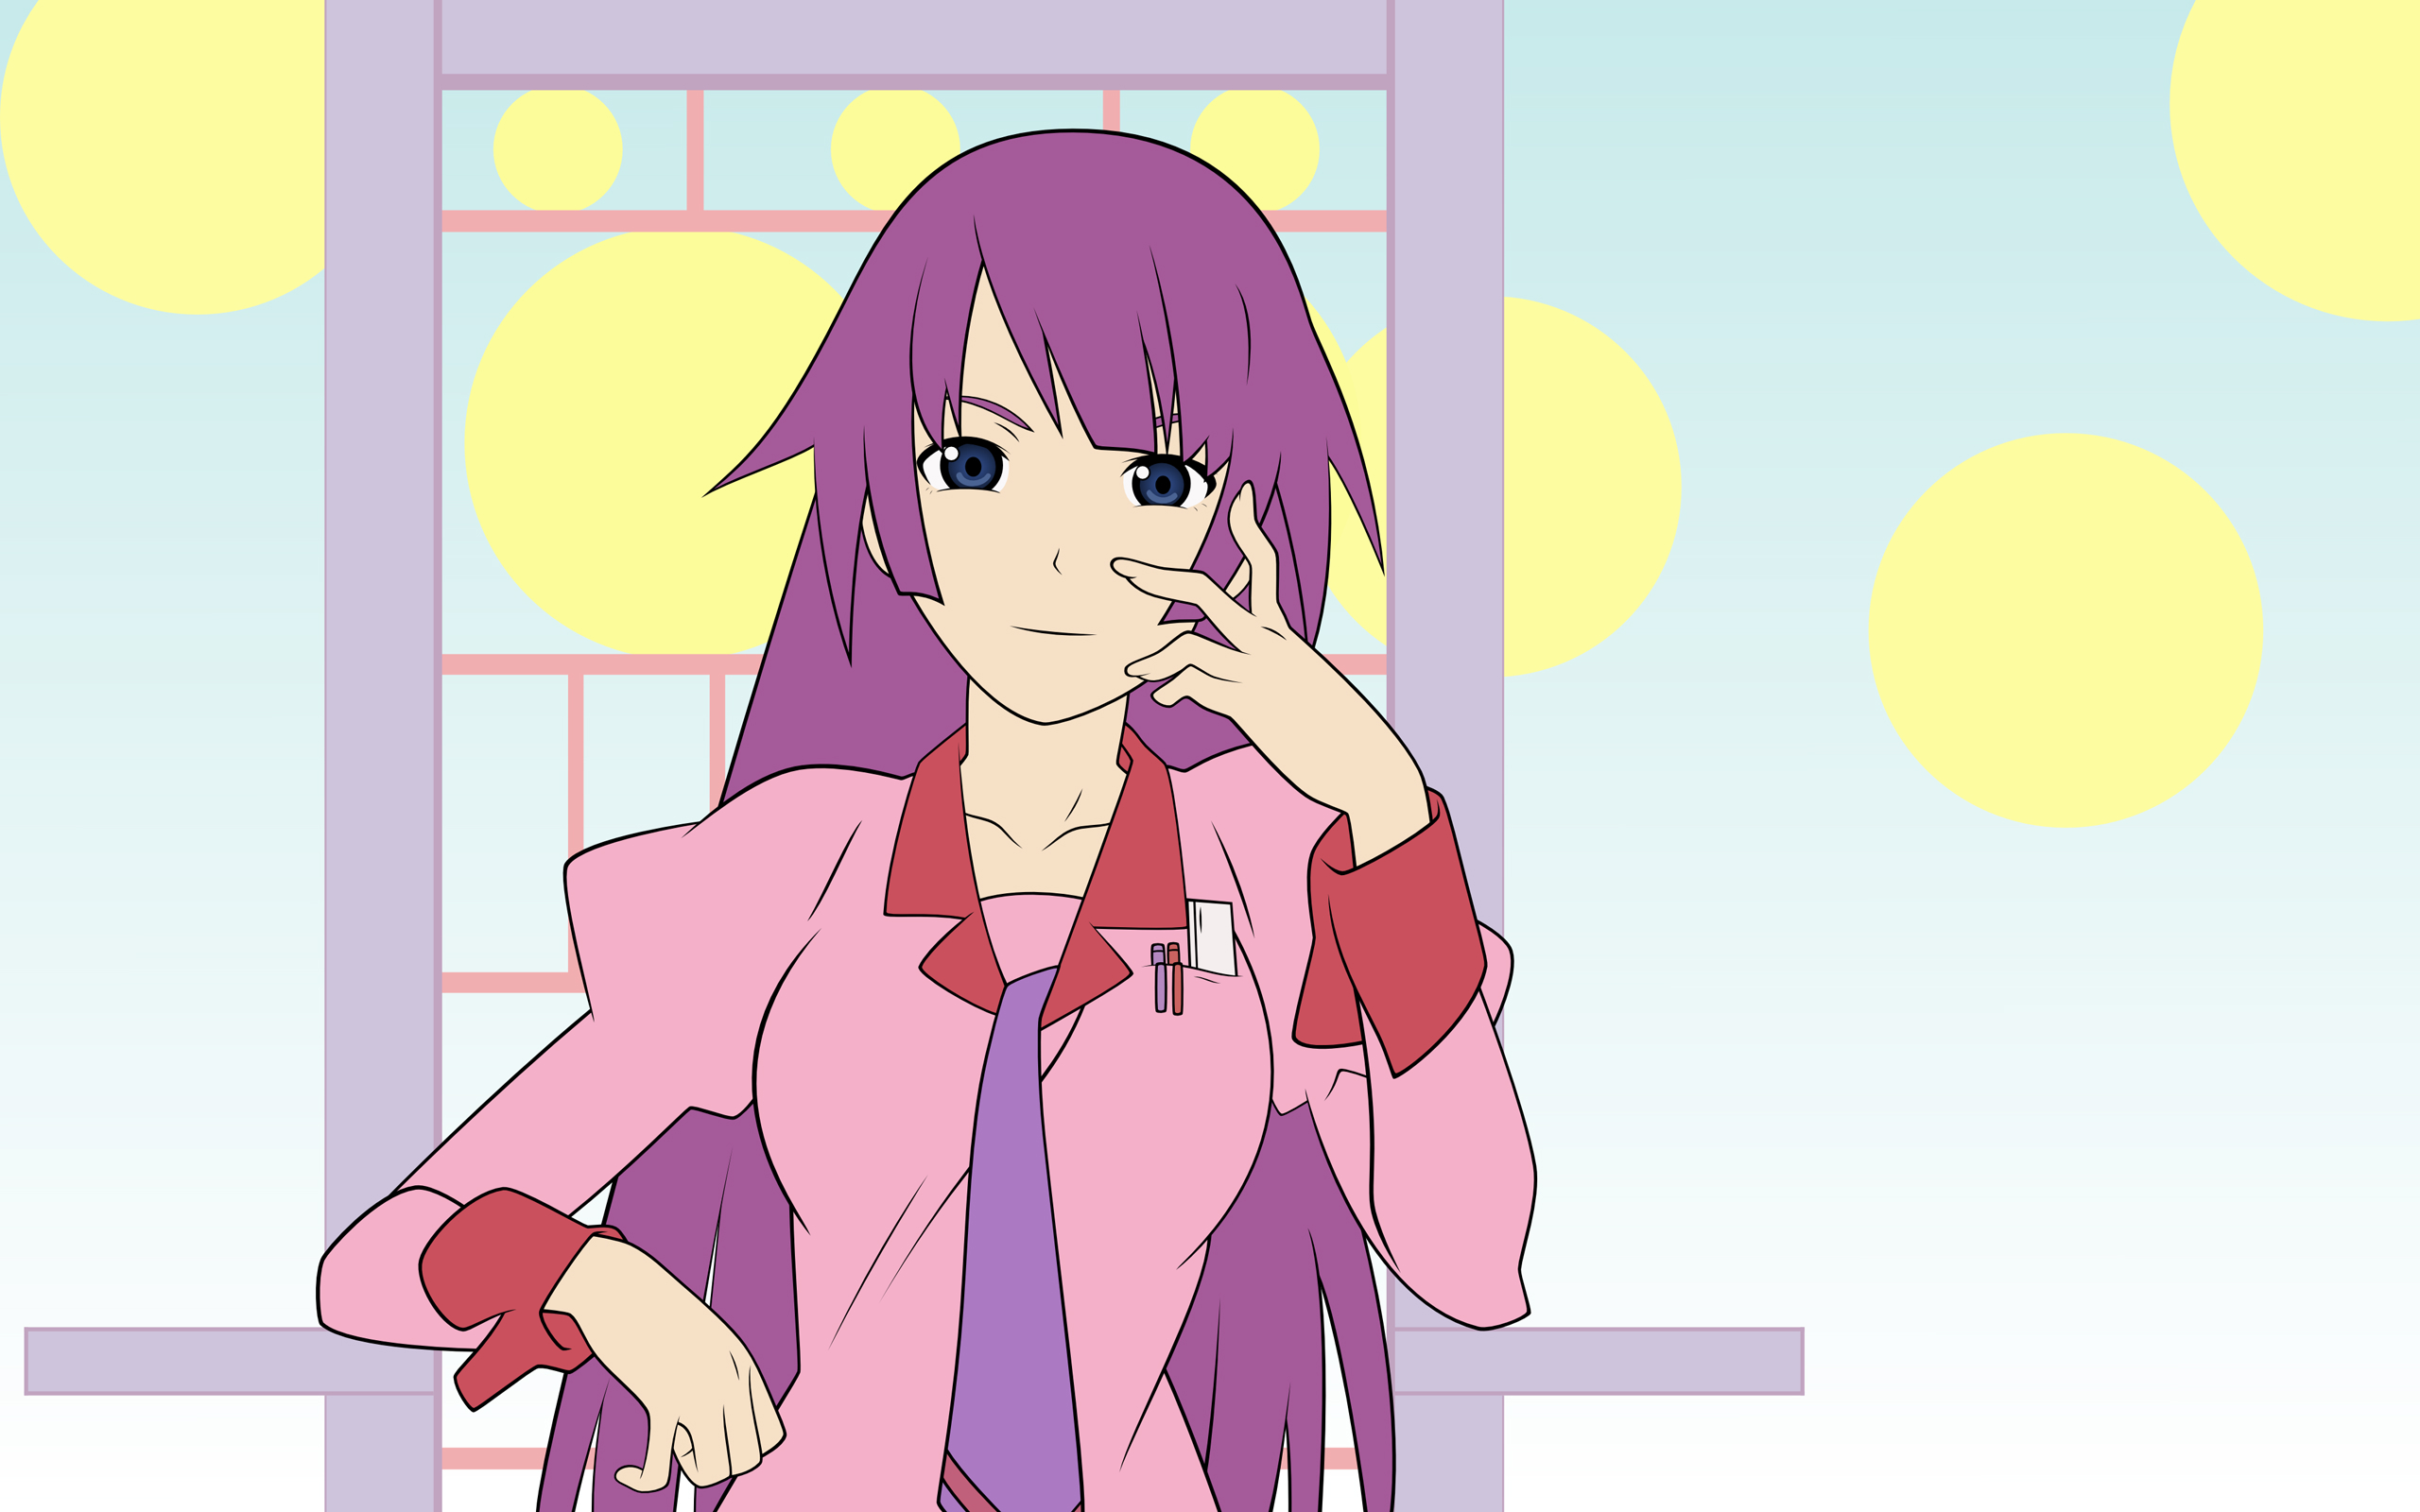 Hitagi Senjōgahara, a purple-haired character from the Anime series Monogatari